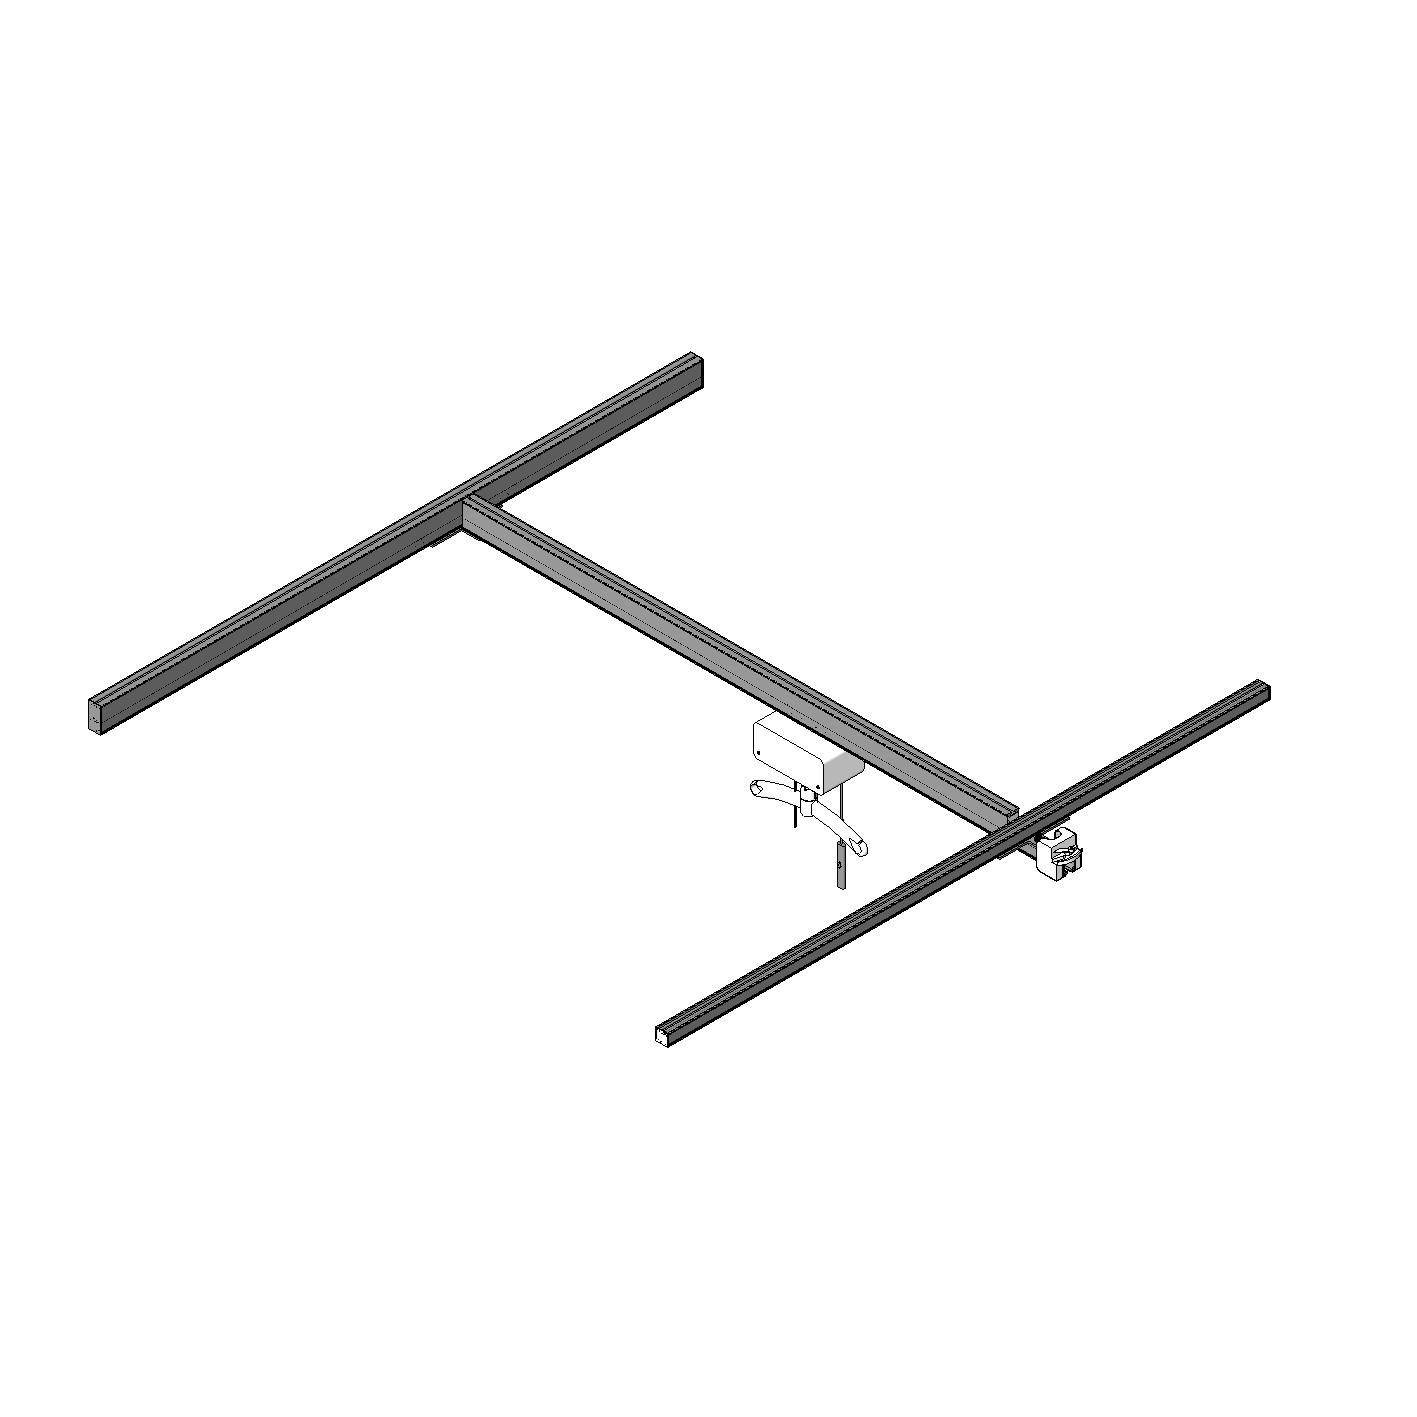 Ceiling Track Hoist - System Type M